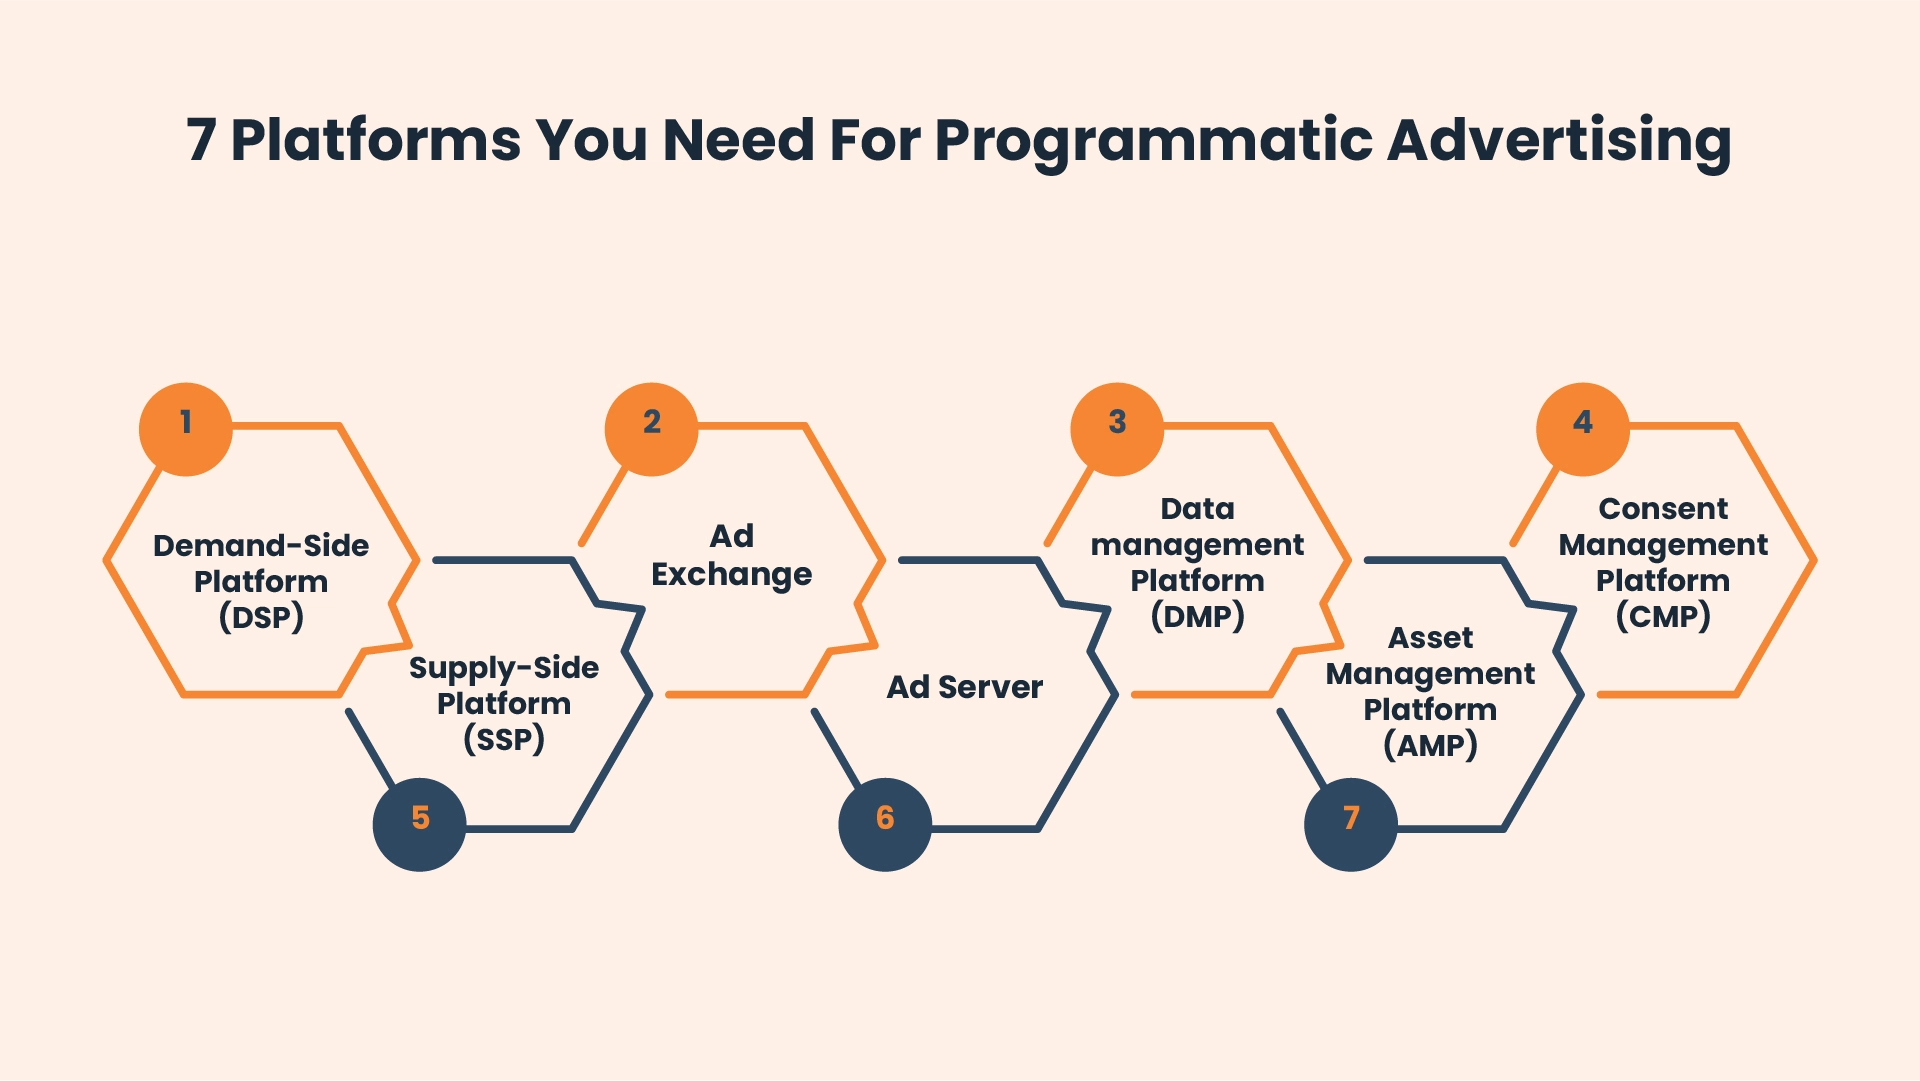 7 Programmatic Advertising Platforms